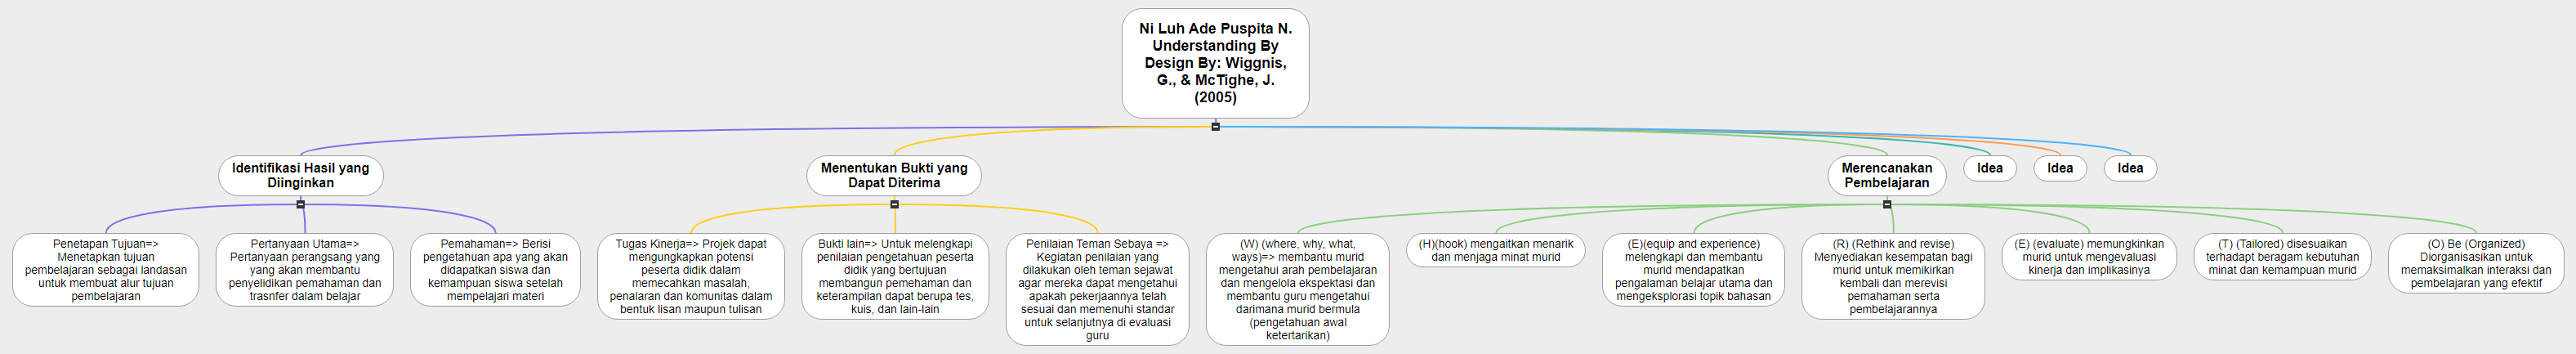 Ni Luh Ade Puspita N.                                                          Understanding By Design By_ Wiggnis, G., & McTighe, J. (2005)1 Mind Map